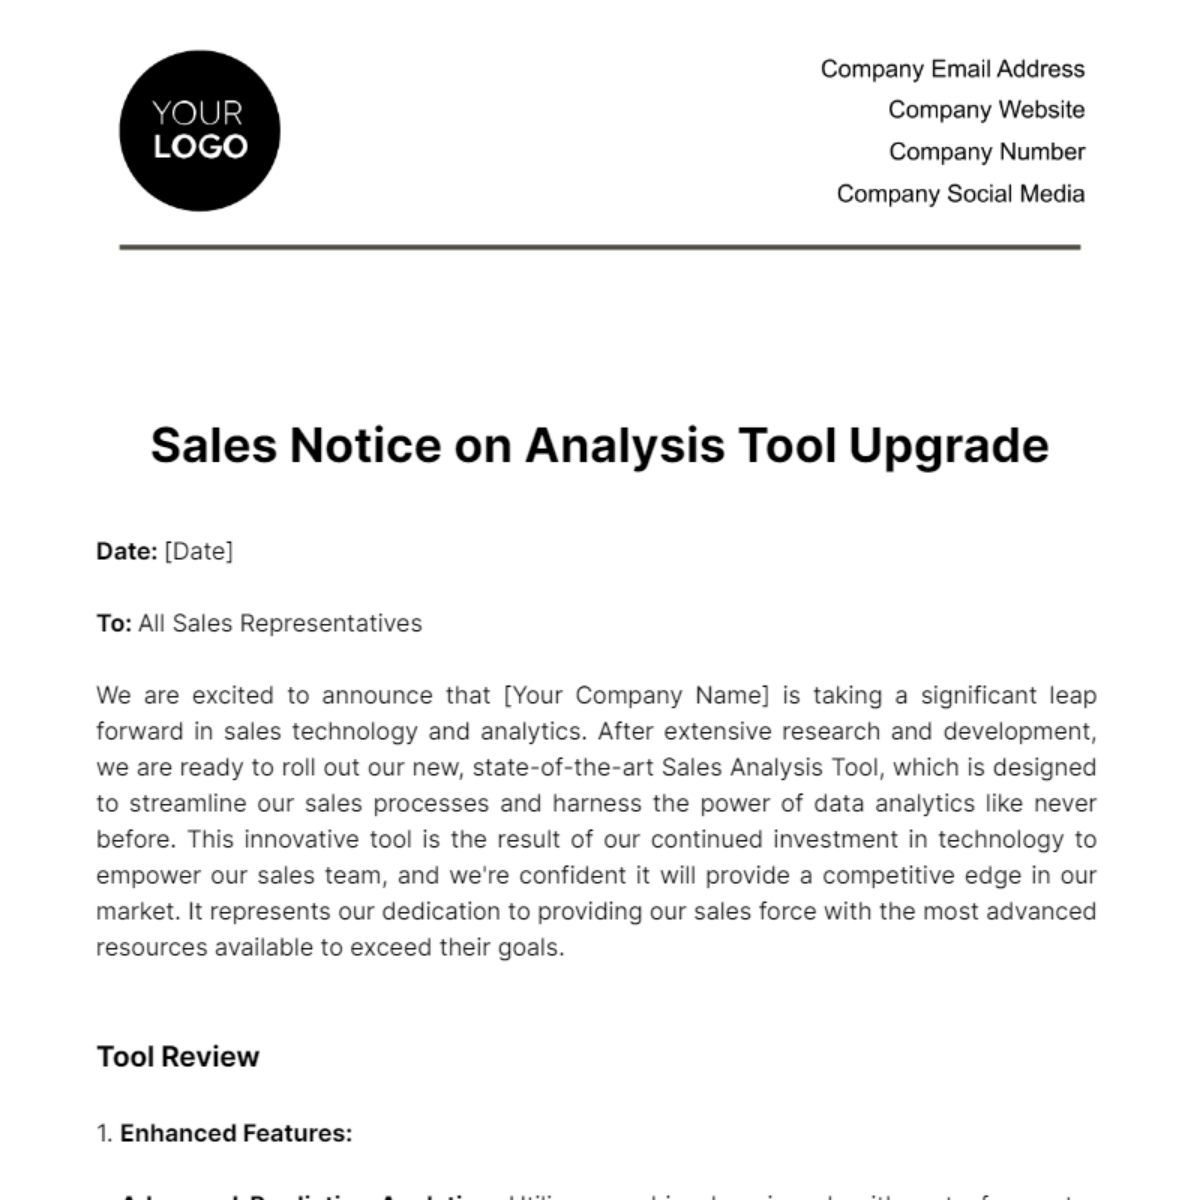 Sales Notice on Analysis Tool Upgrade Template